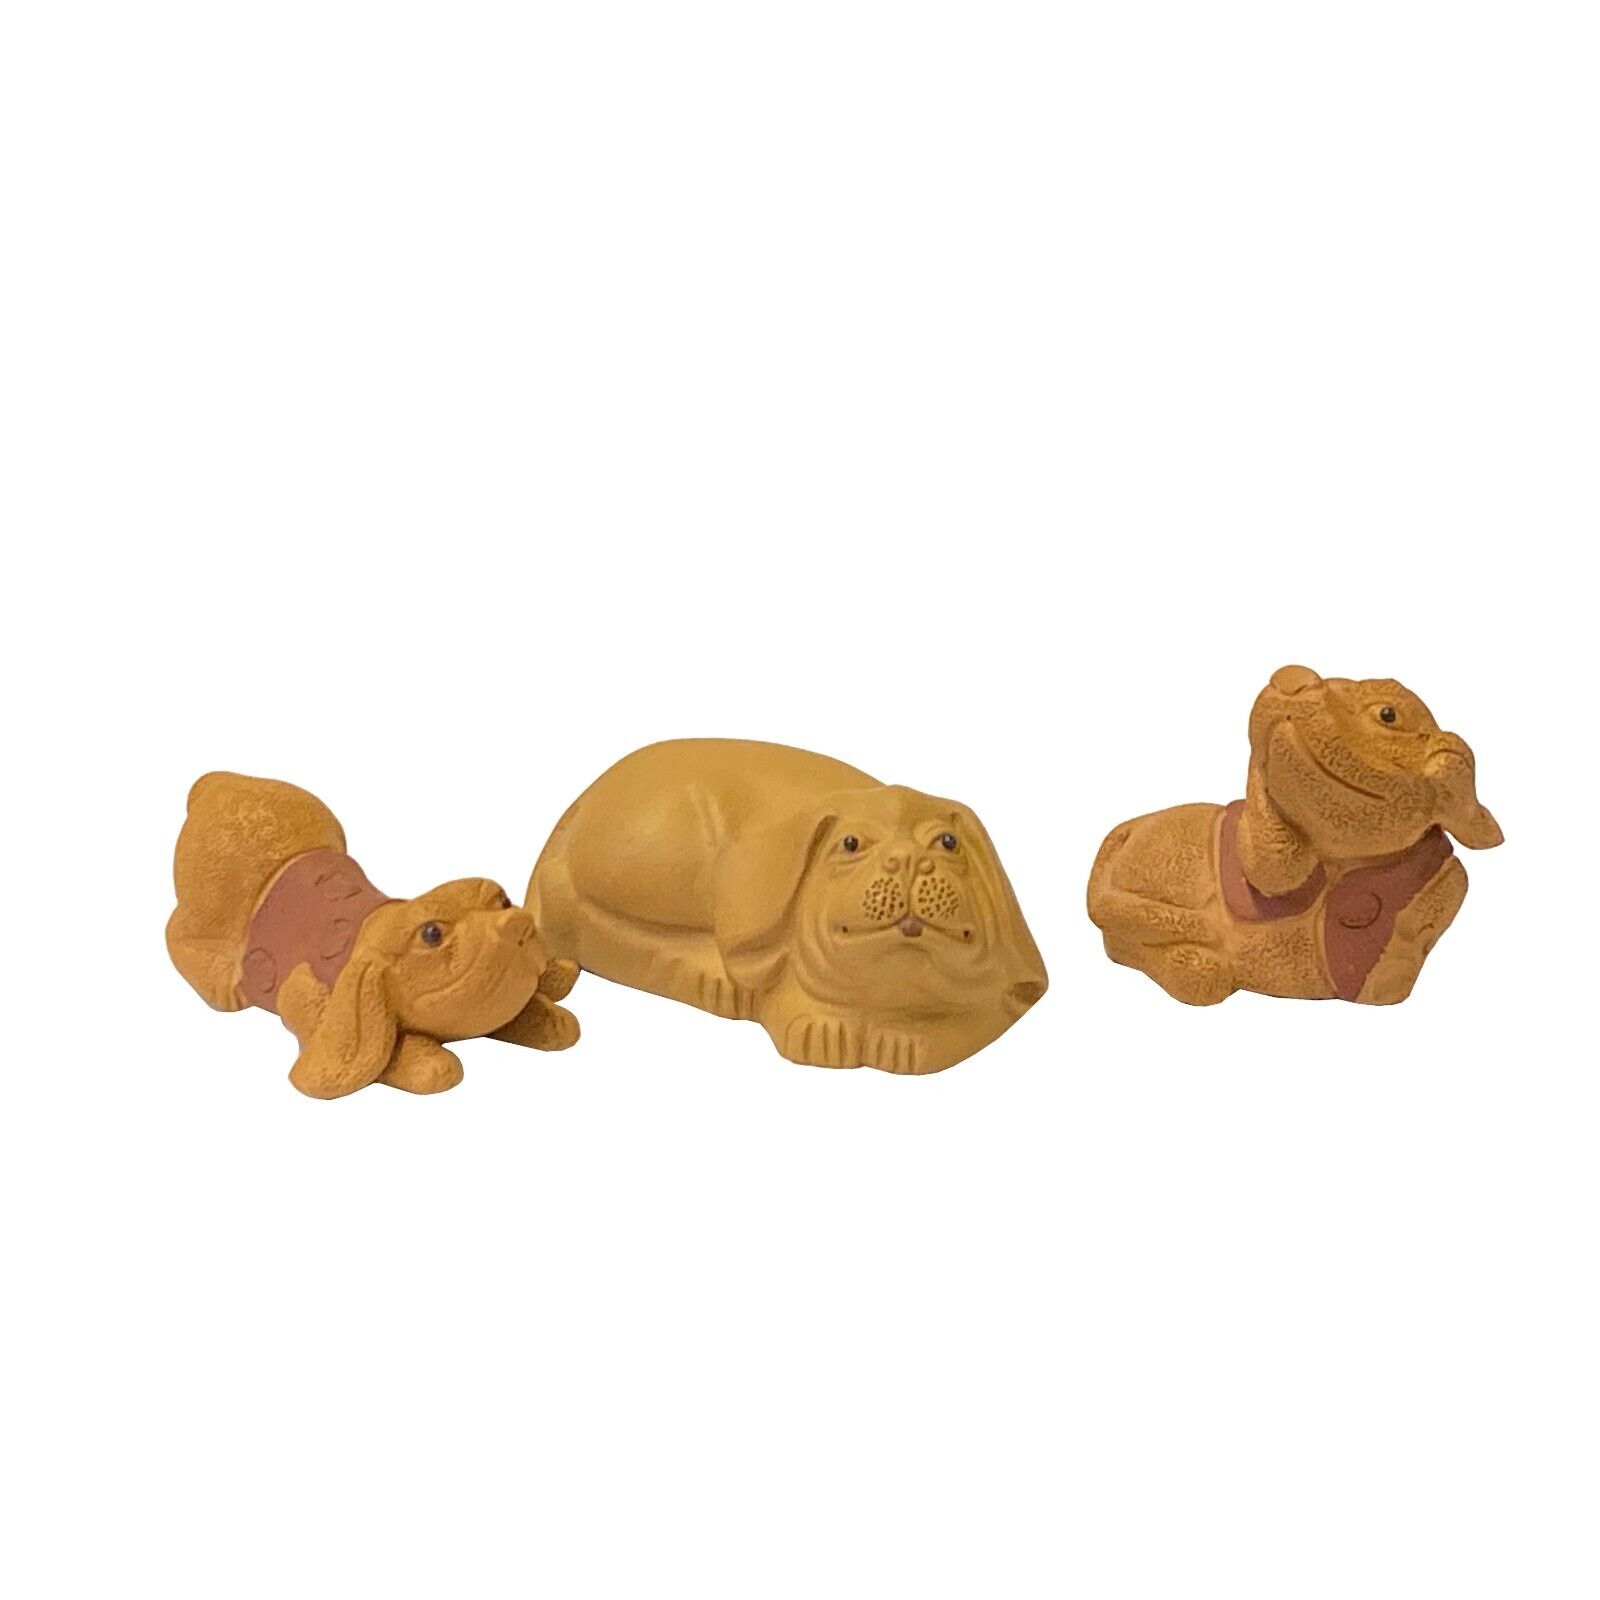 Set of 3 Small Ceramic Animal Figure Display Art ws2344